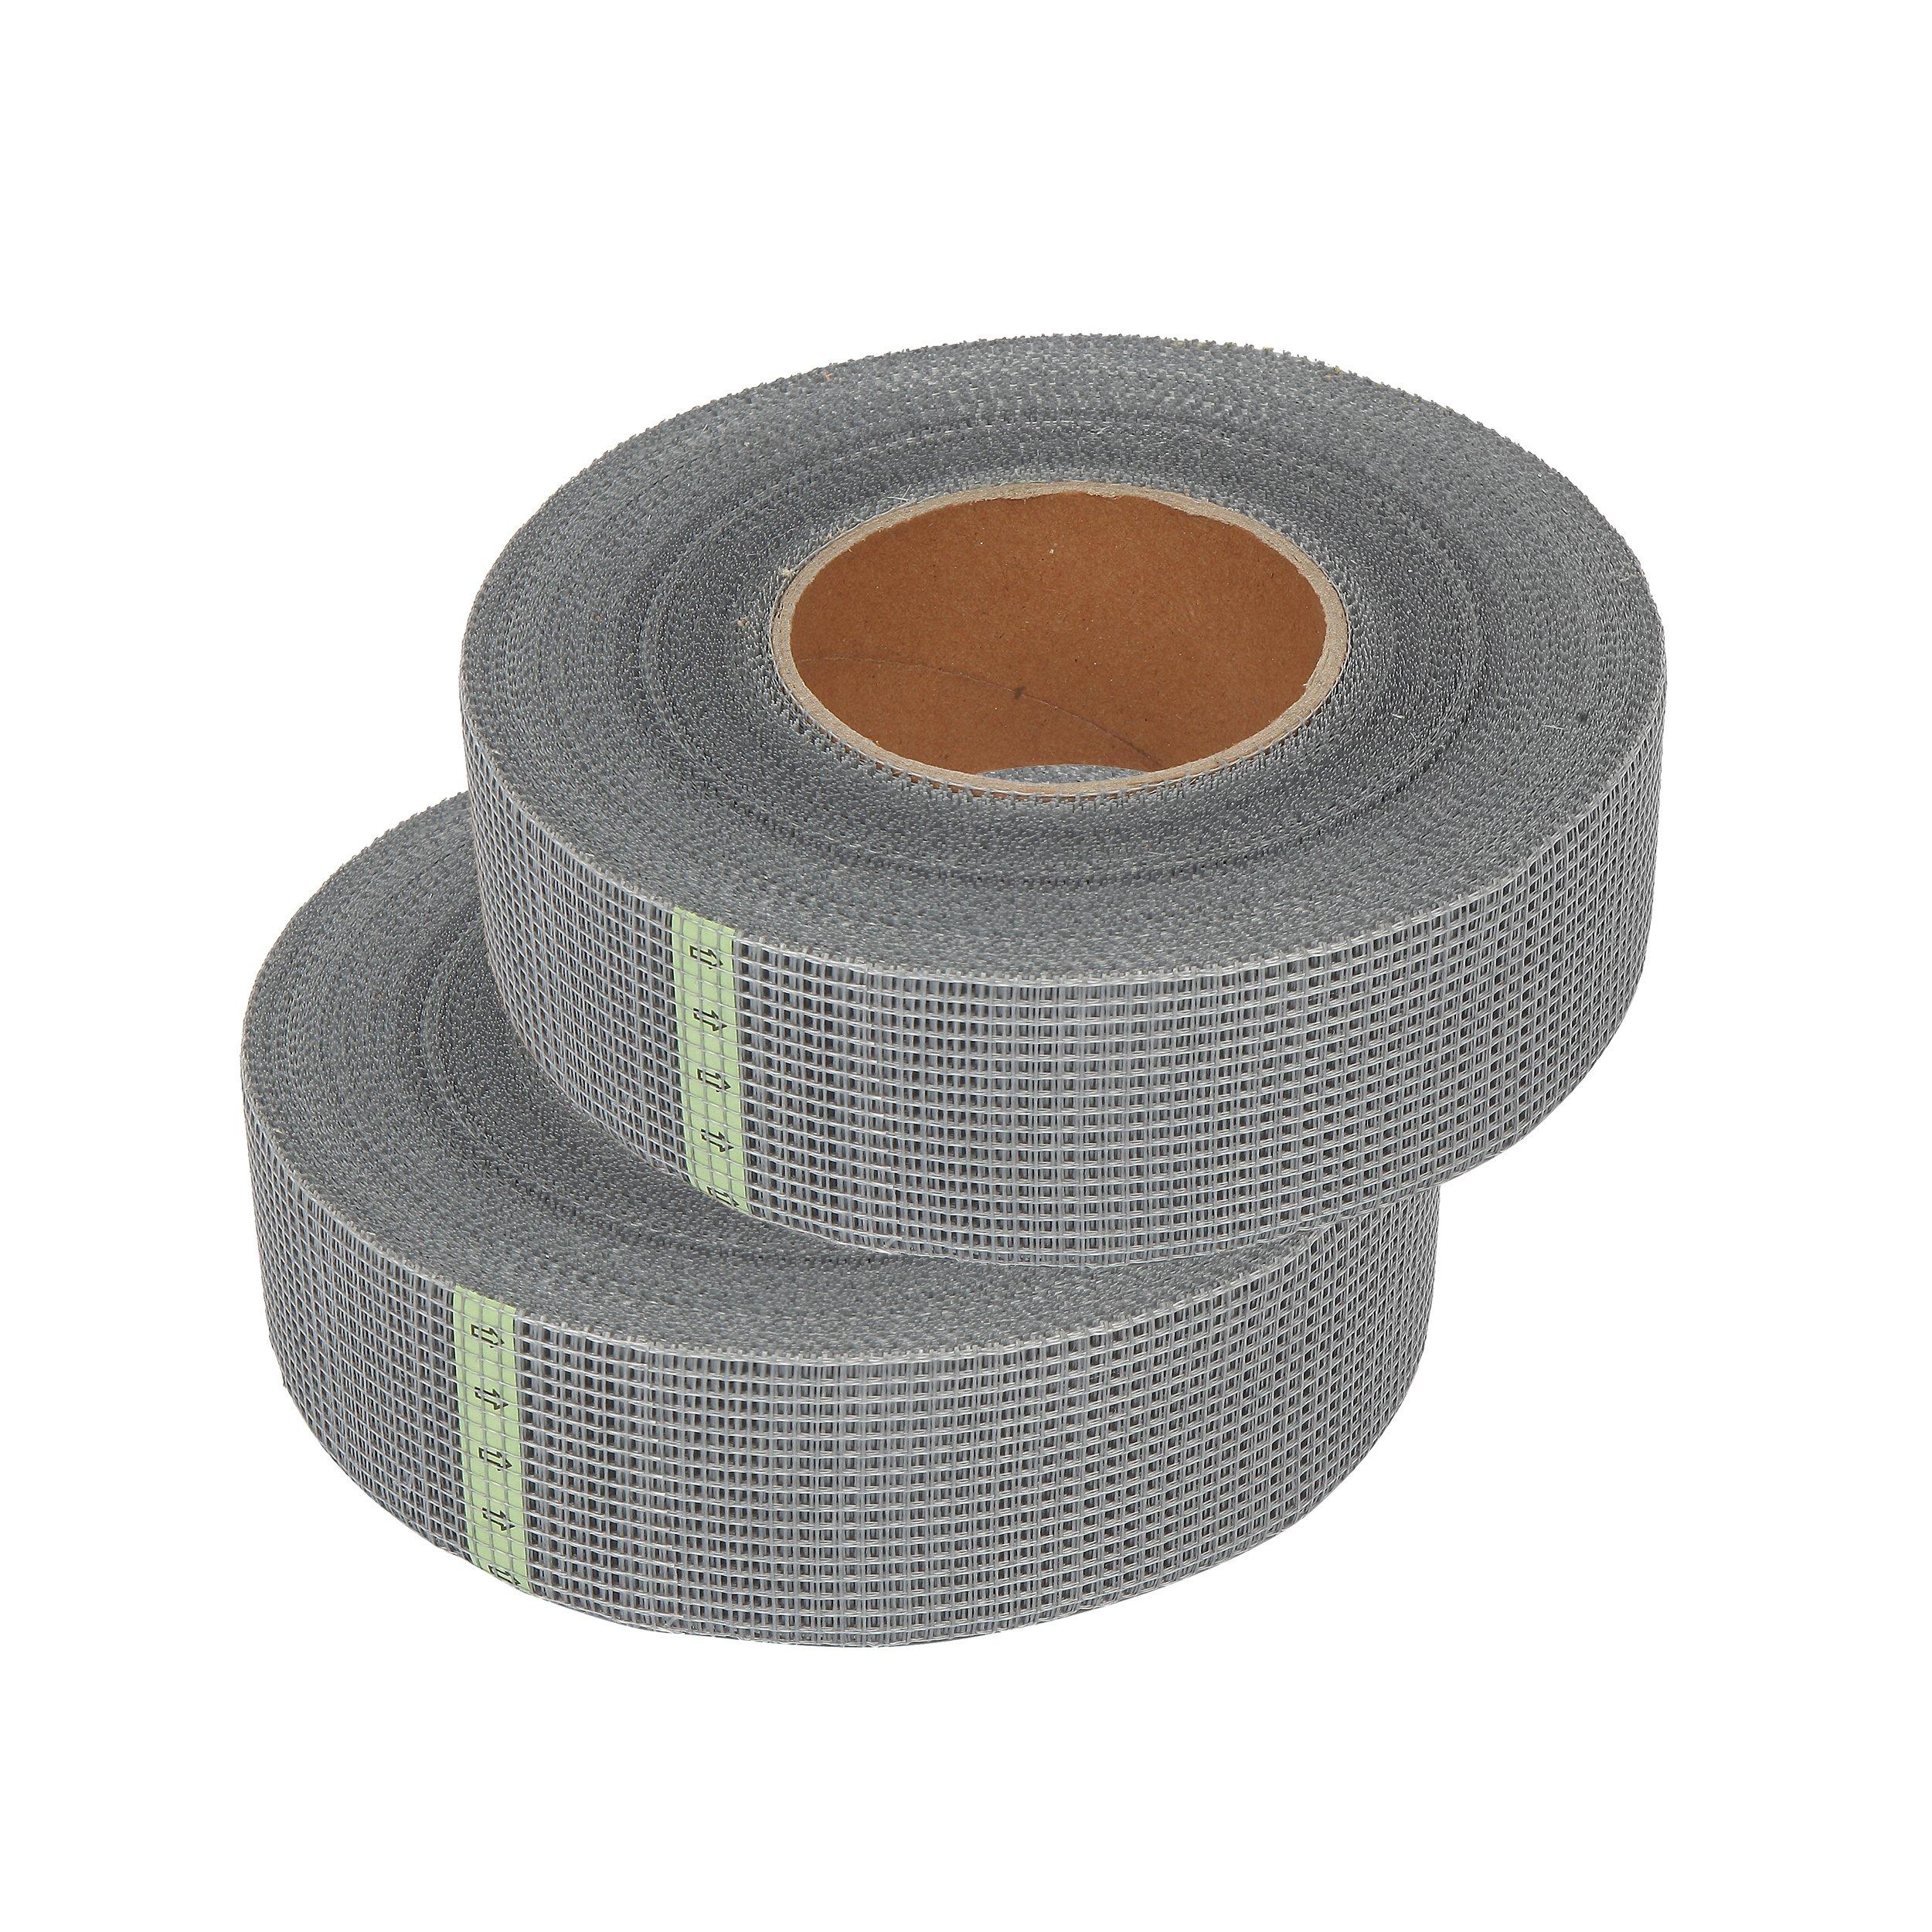 Goldblatt Cement Board Tape 300ft. - 2 pack